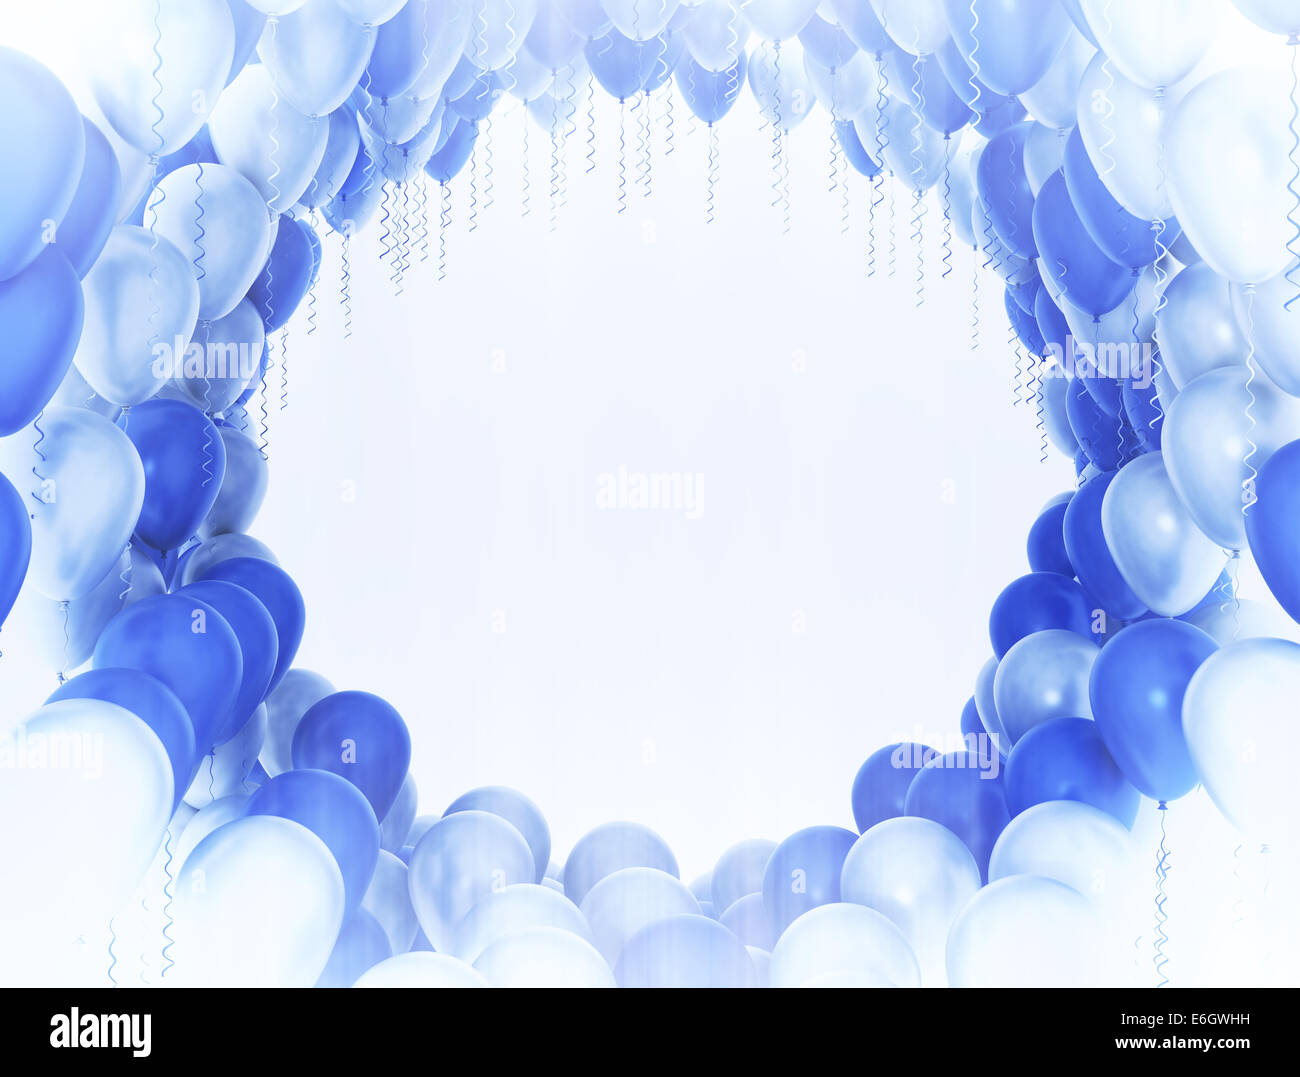 Celebration background. Blue and white balloons Stock Photo